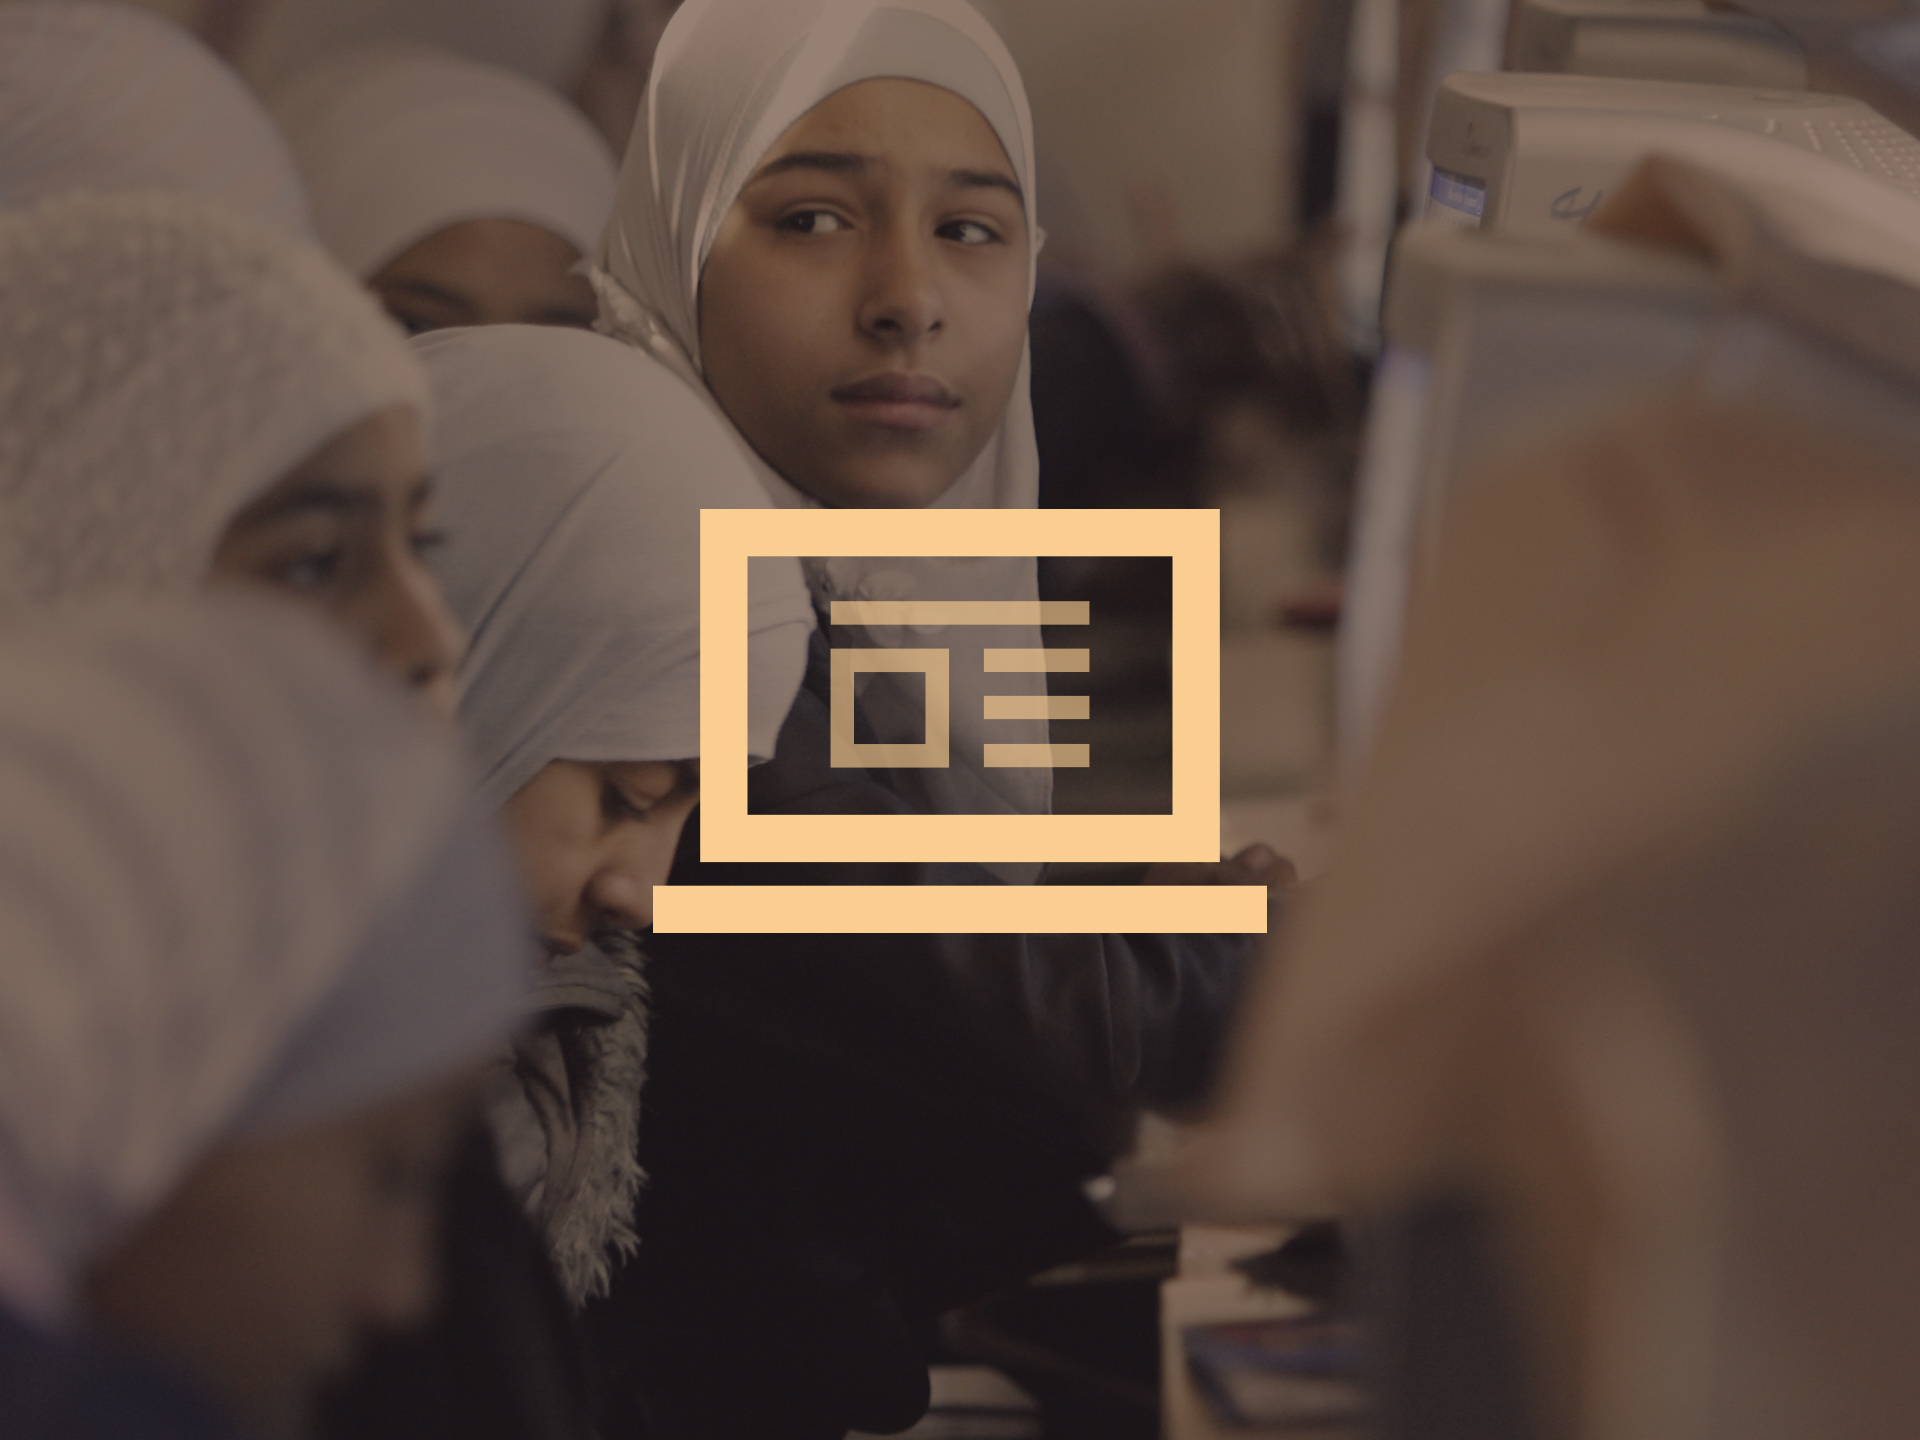 
Malala Fund website advocacy page
